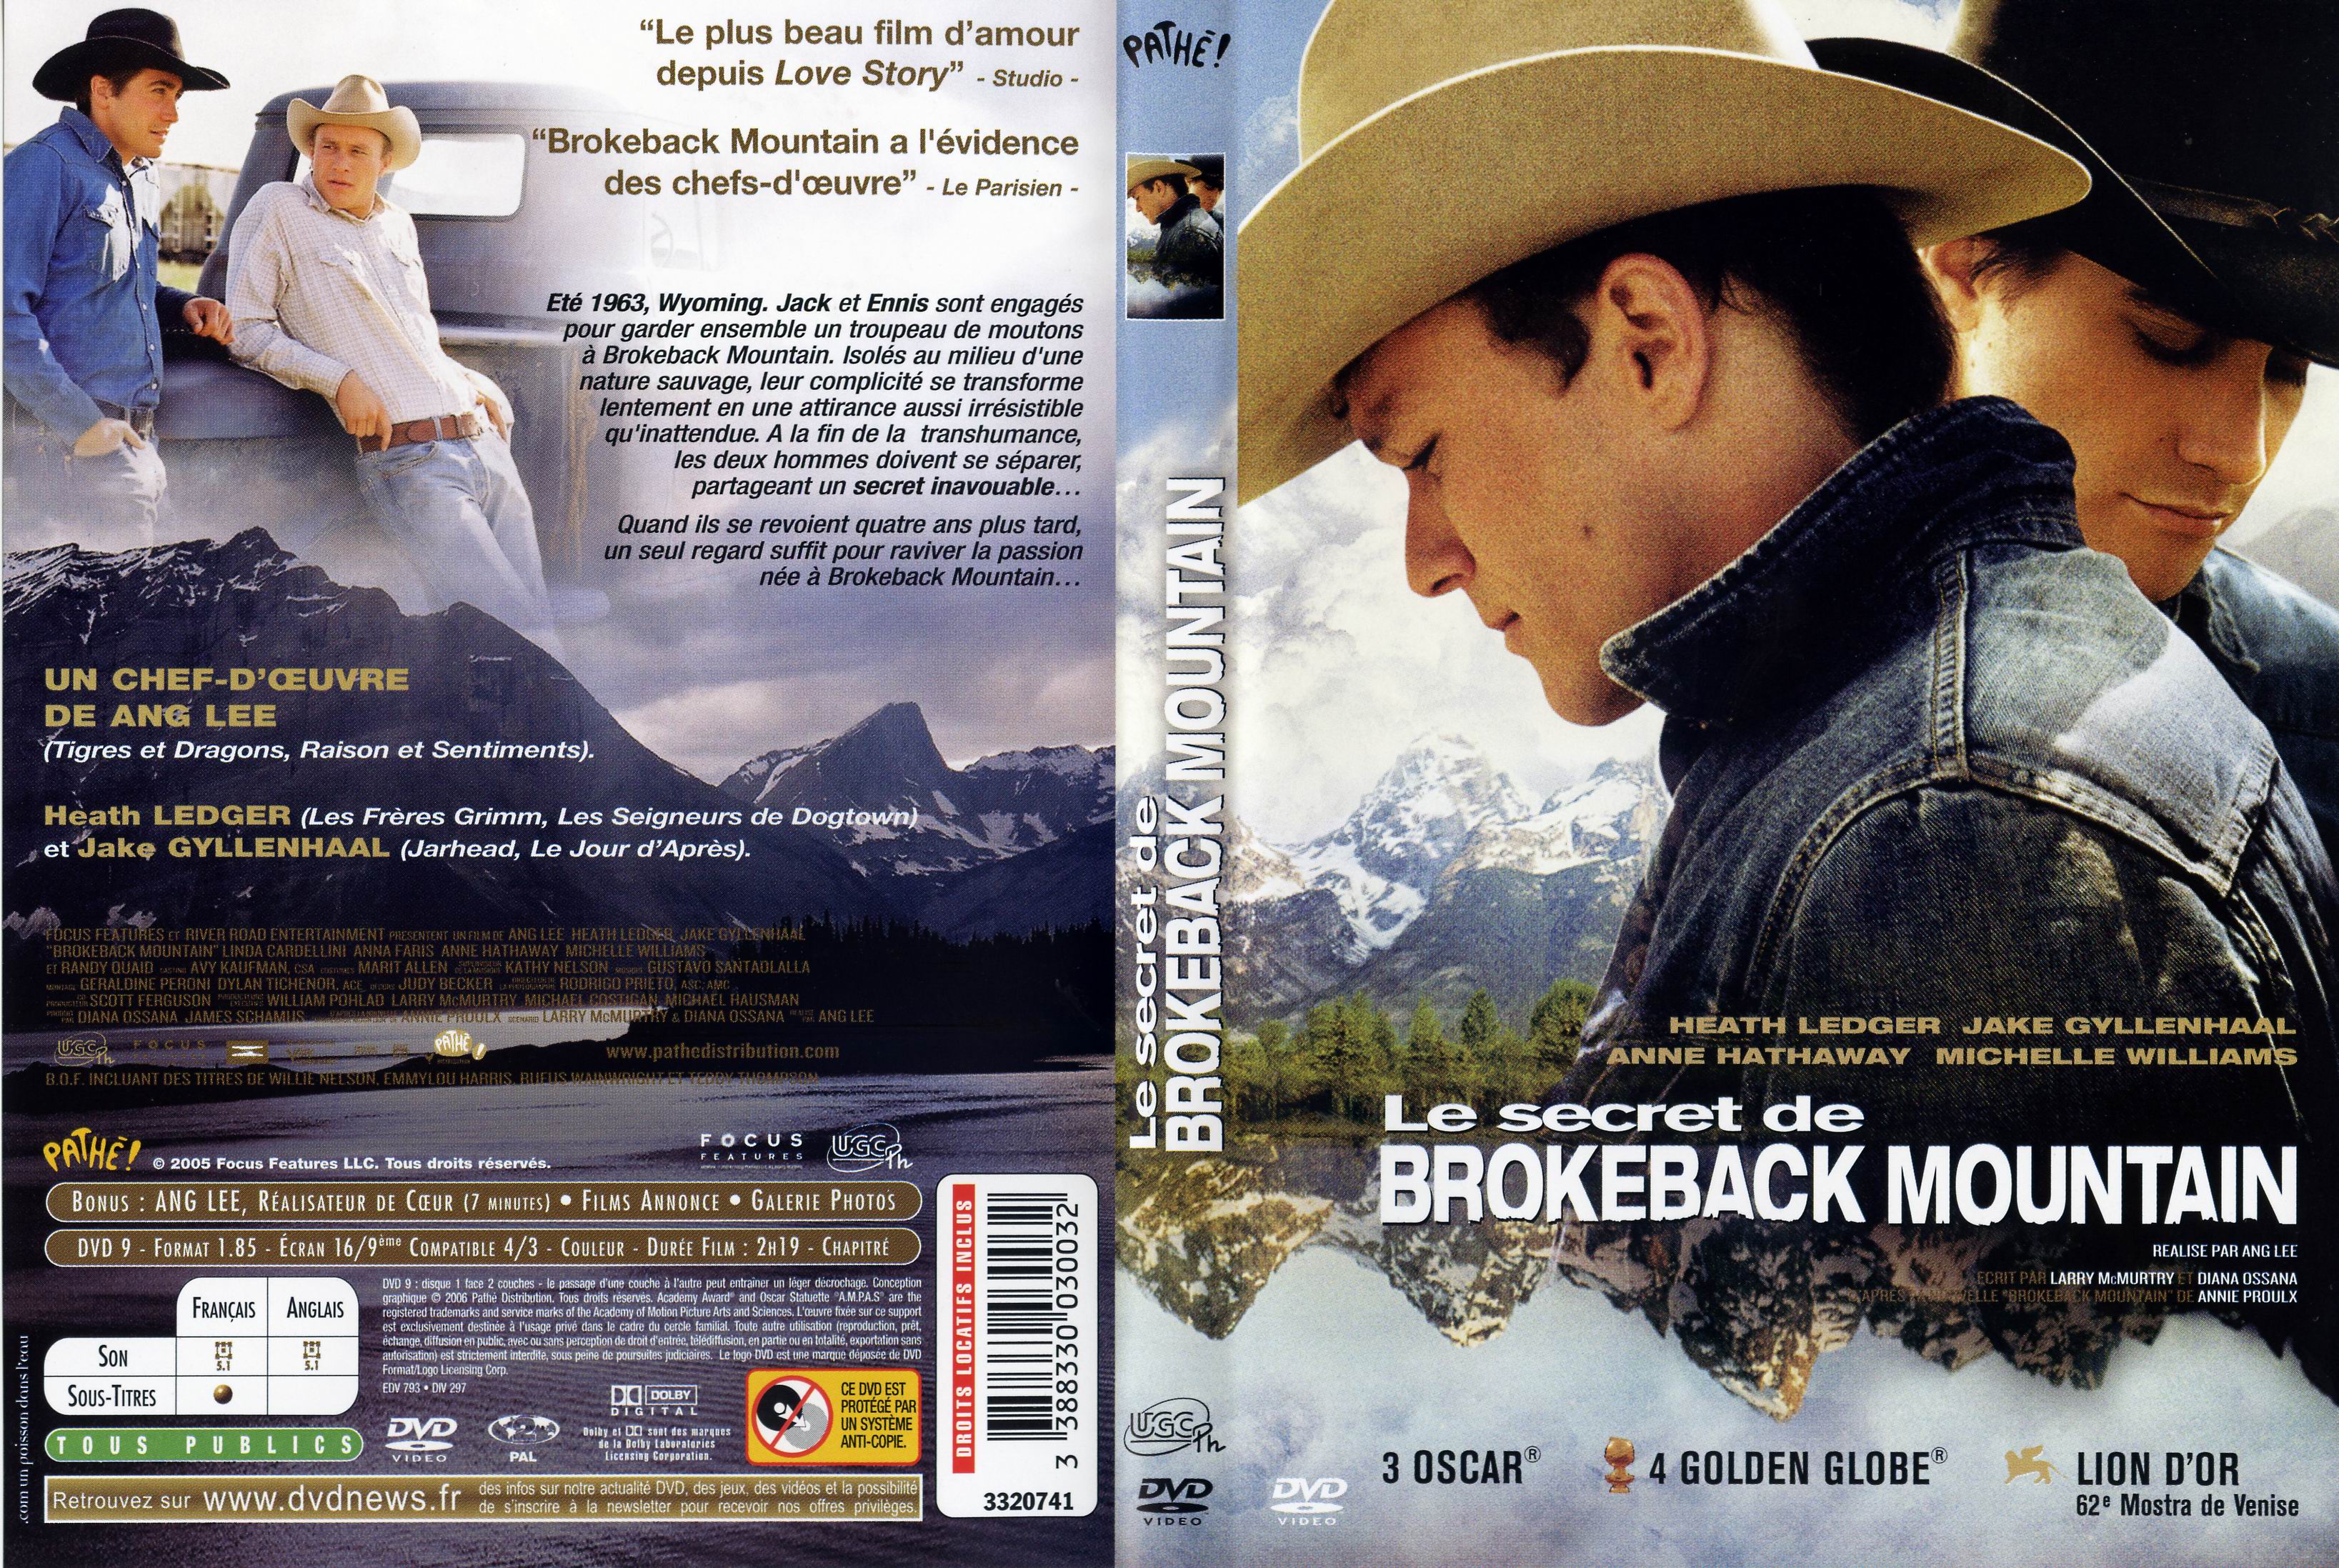 Jaquette DVD Le secret de brokeback mountain